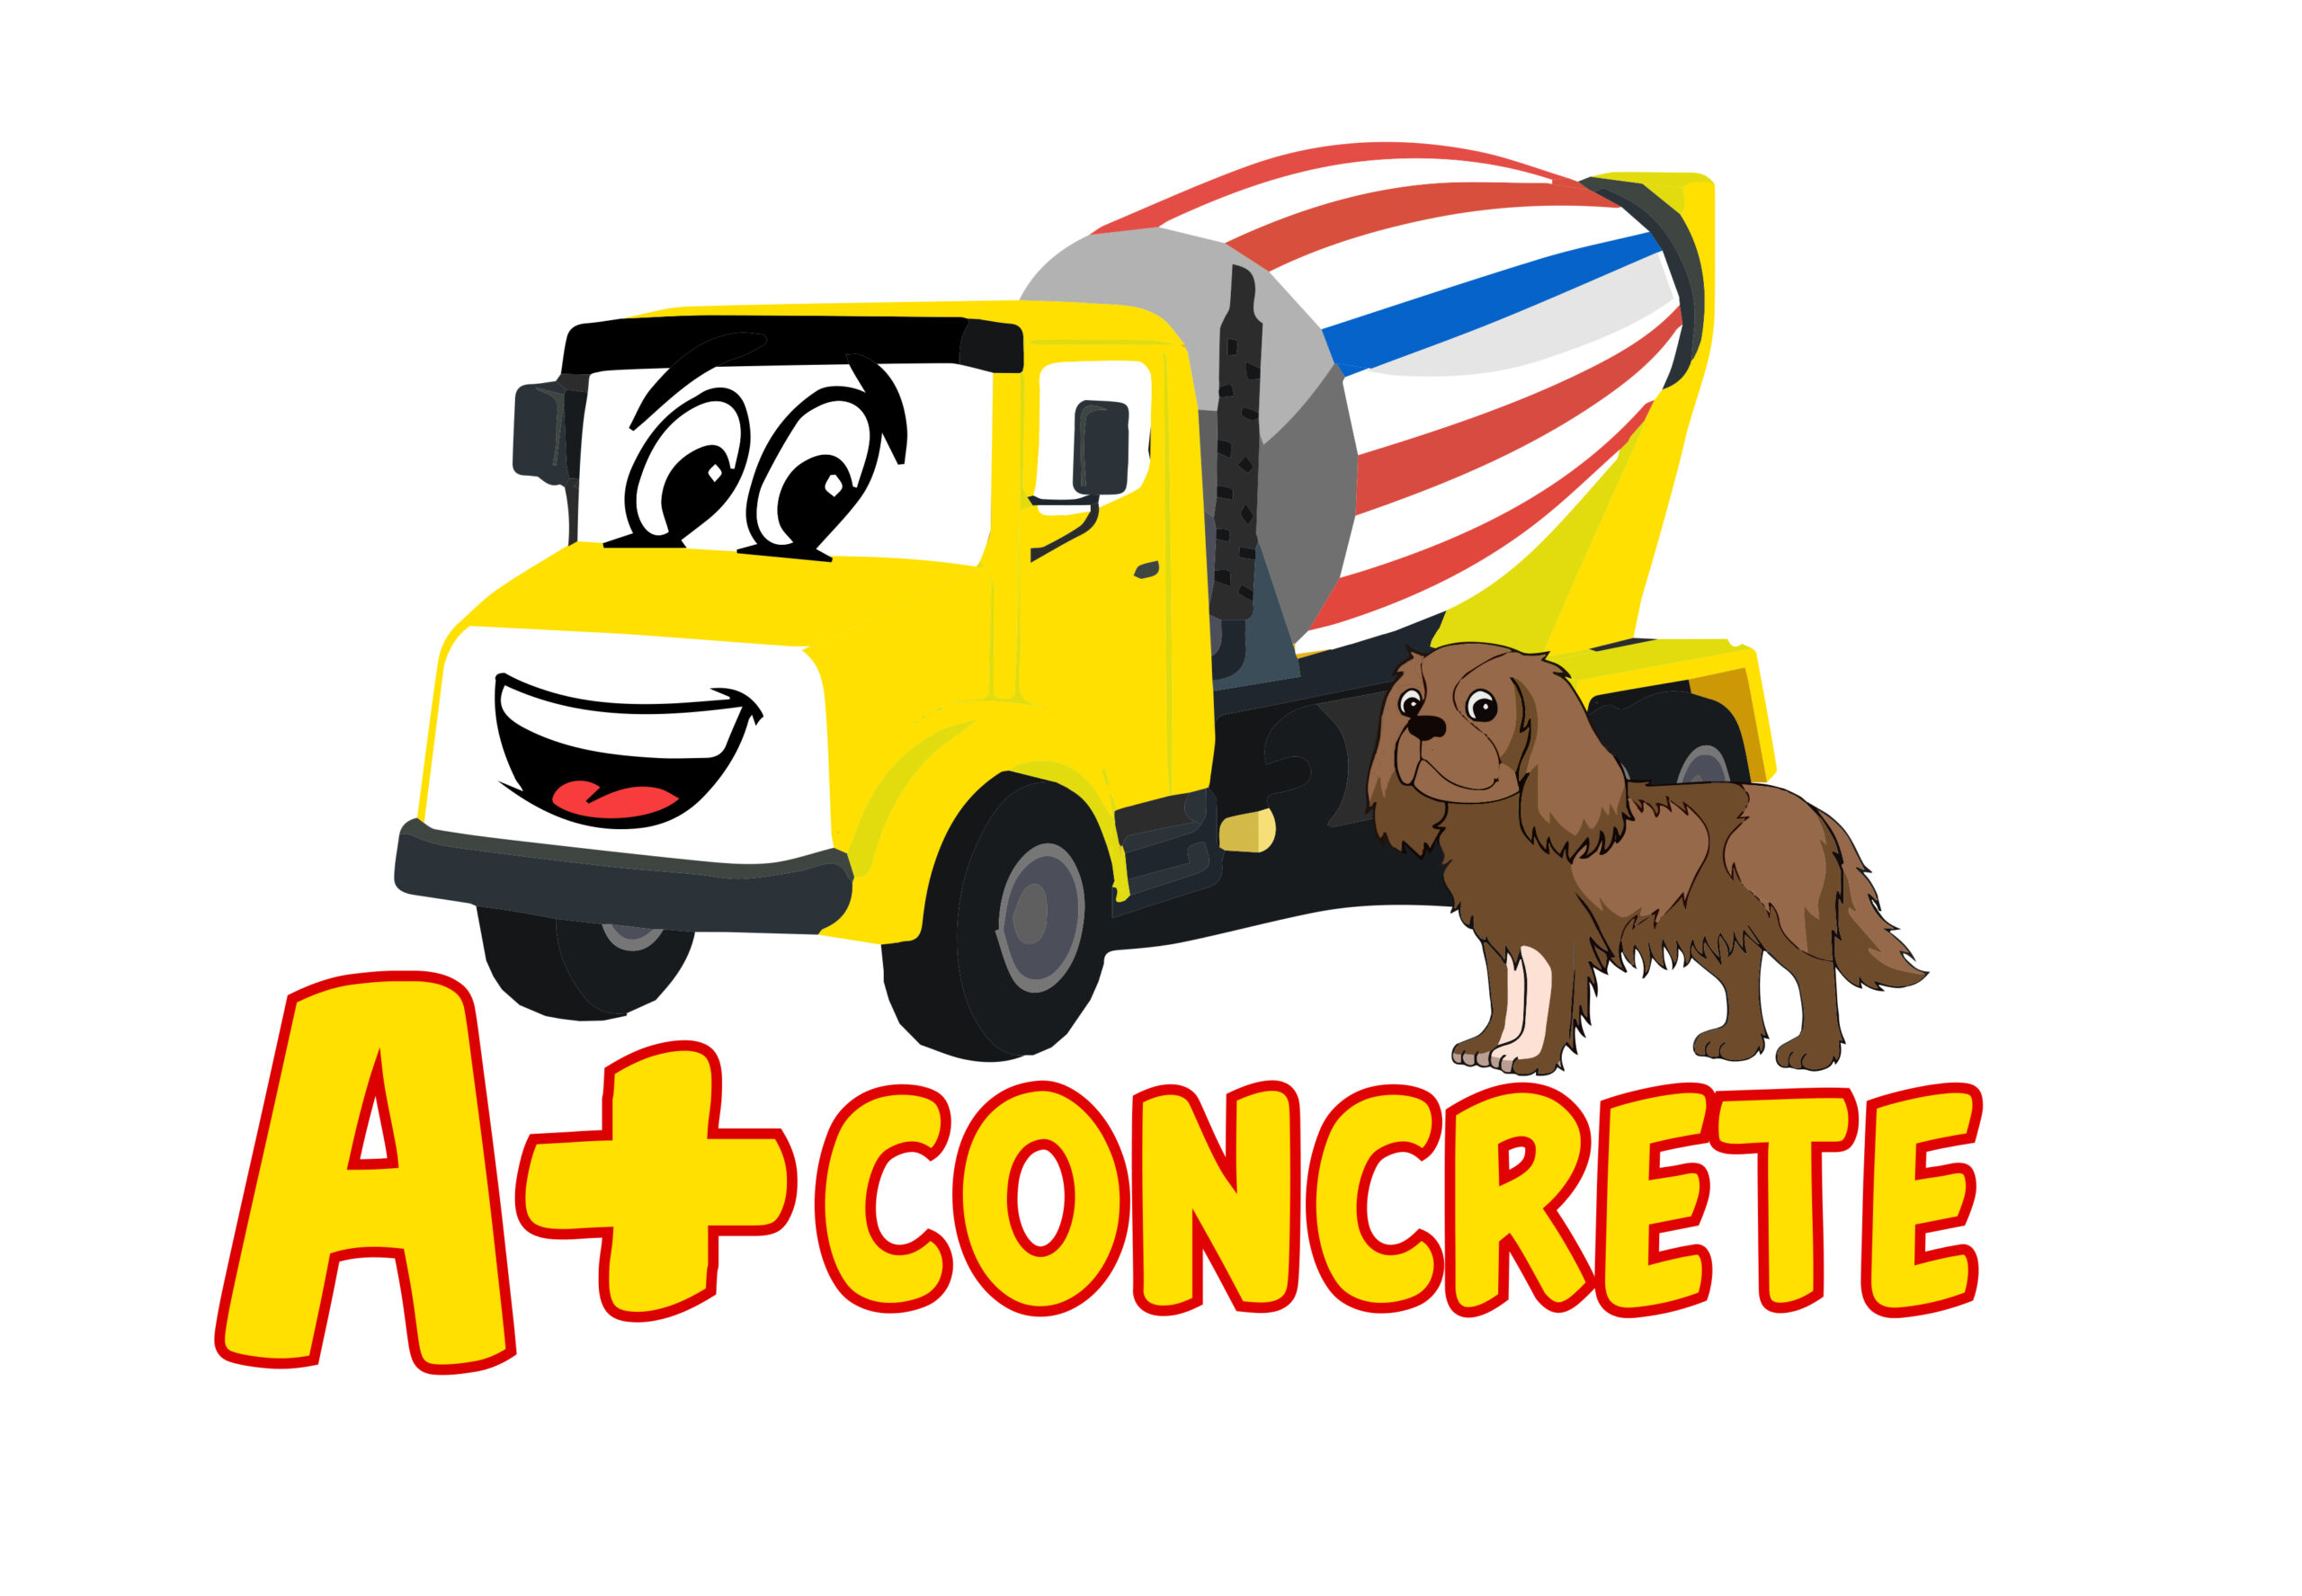 A+ Concrete Logo | Concrete Pouring Services in Connecticut. We service all Fairfield County